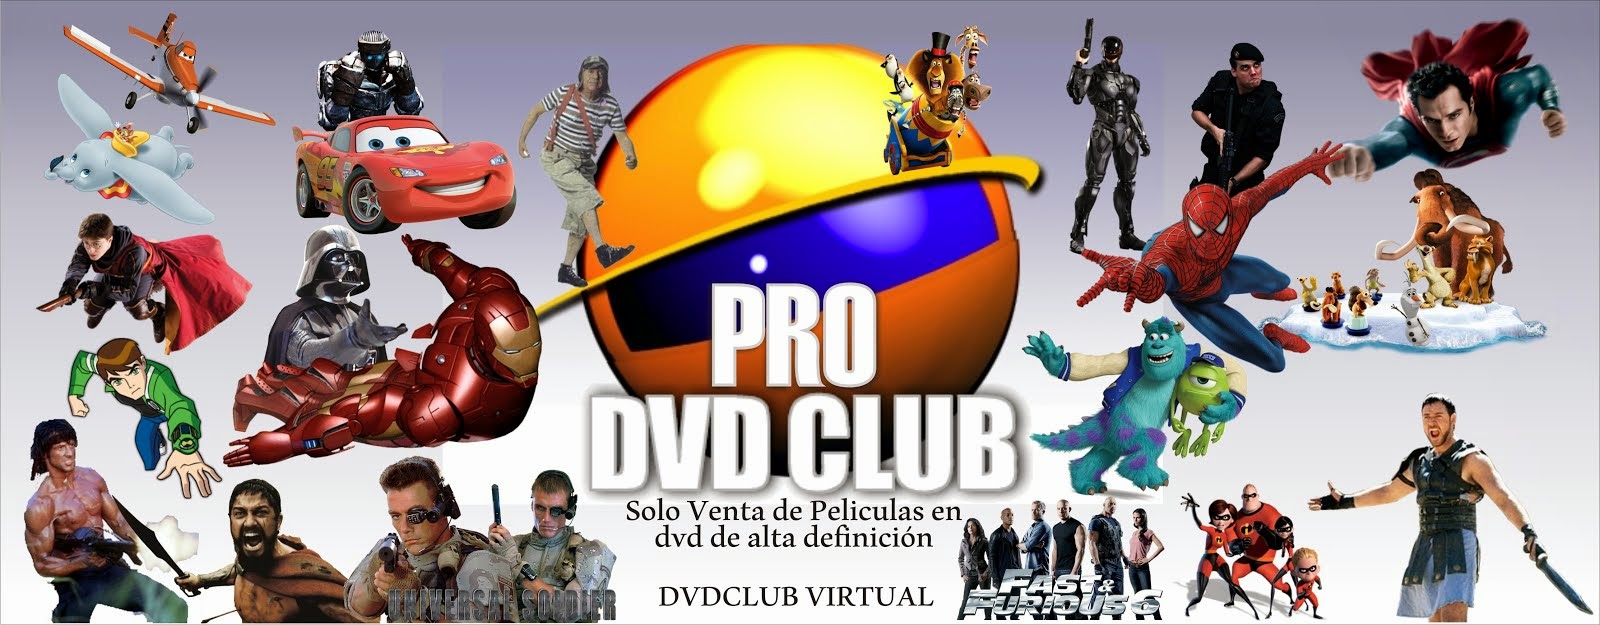 PRO-DVD-CLUB-CTES.